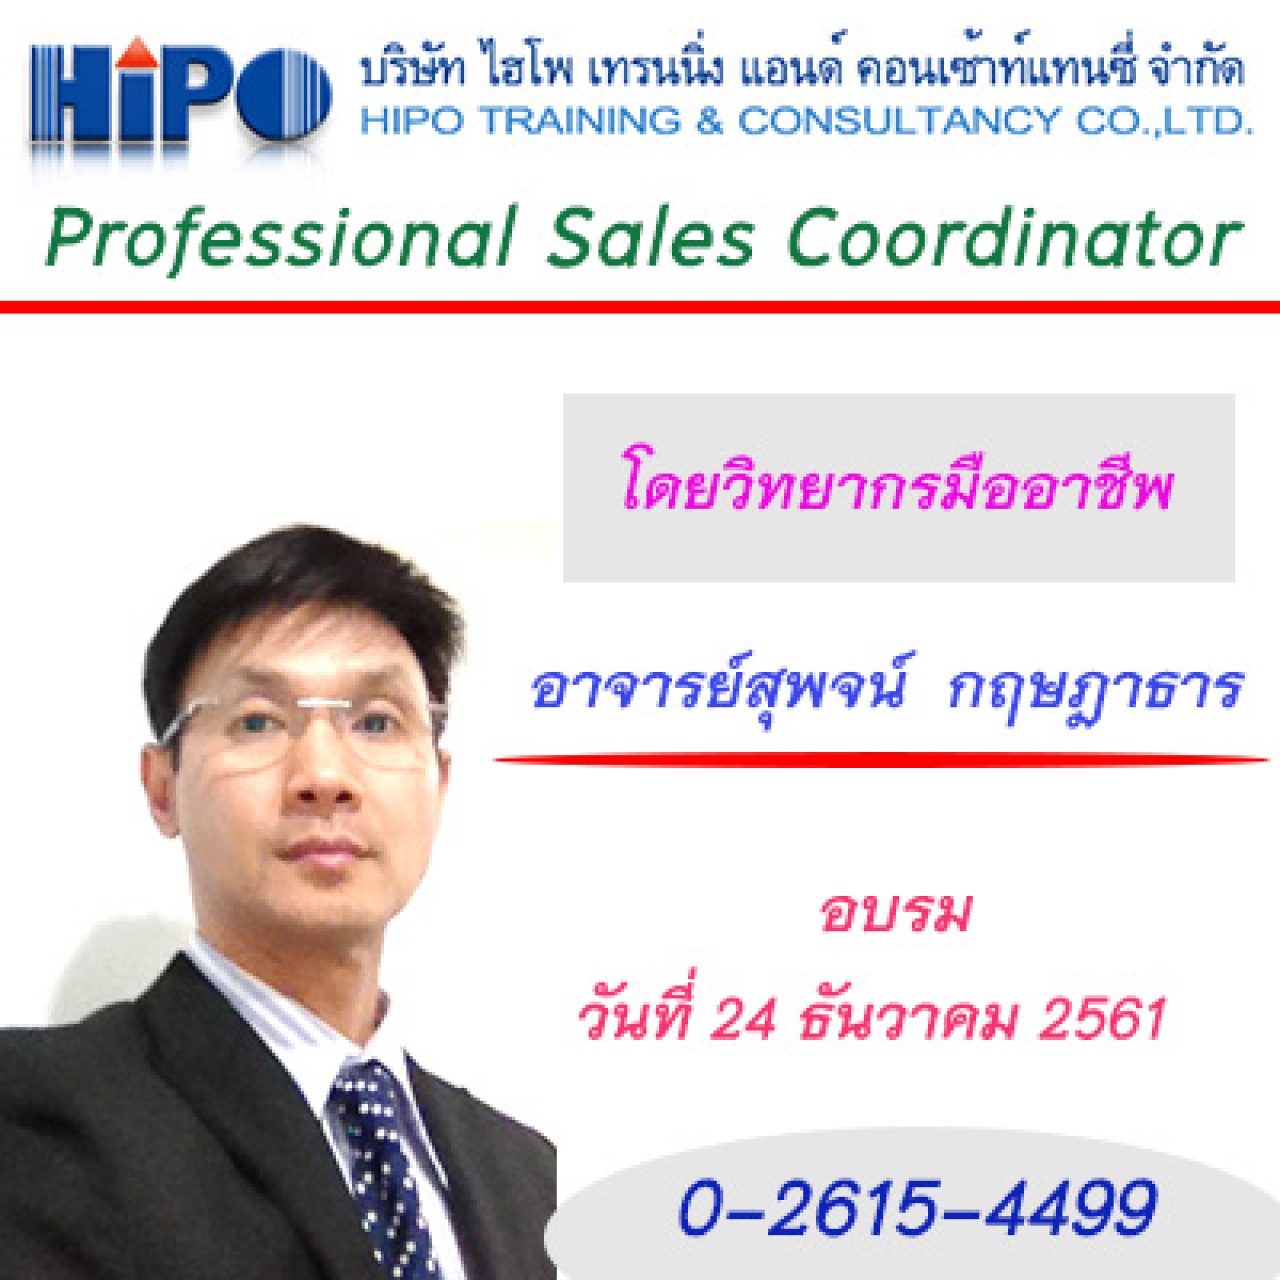 Professional Sales Coordinator